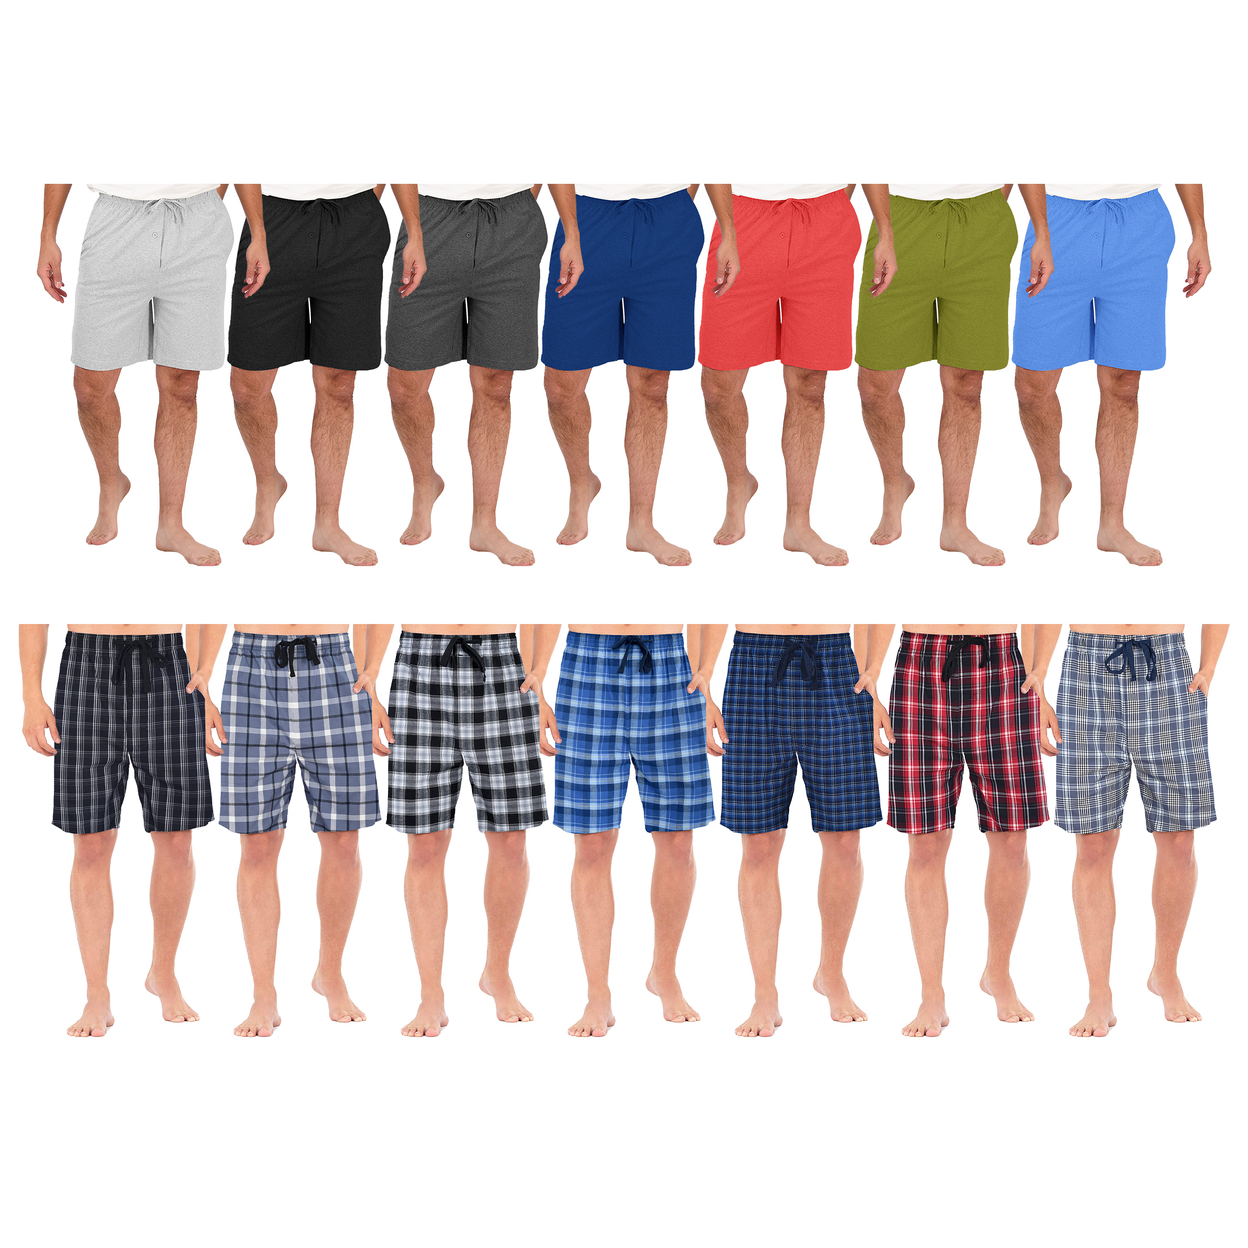 Multi-Pack: Men's Ultra Soft Knit Lounge Pajama Sleep Shorts - Solid, 3-pack, Medium